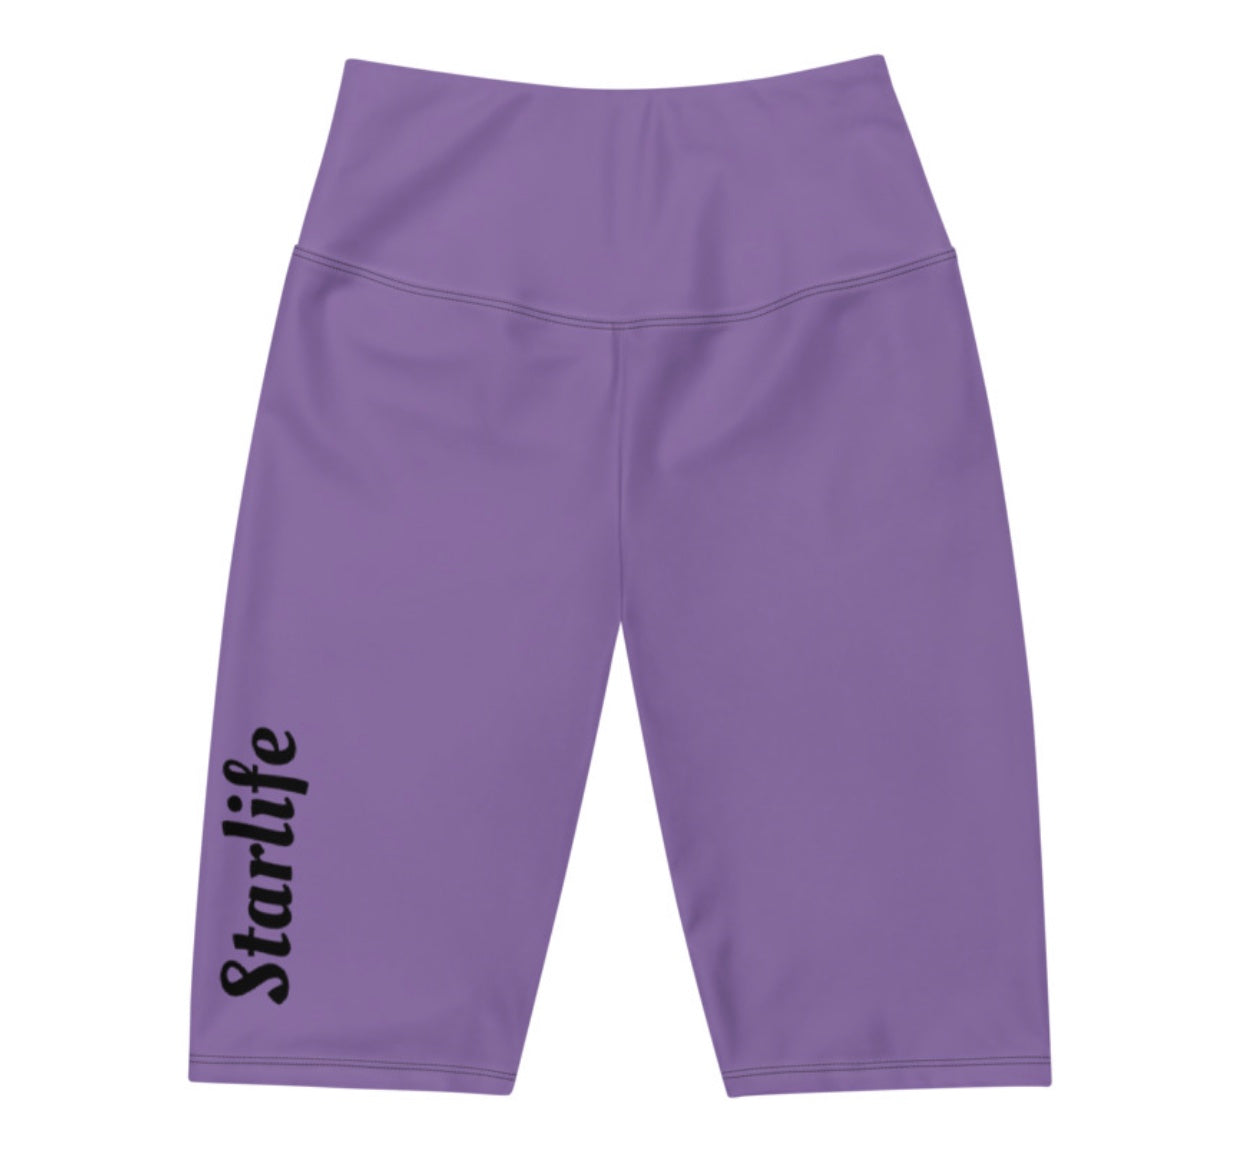 Starlife Women’s Biker Shorts (Purple)